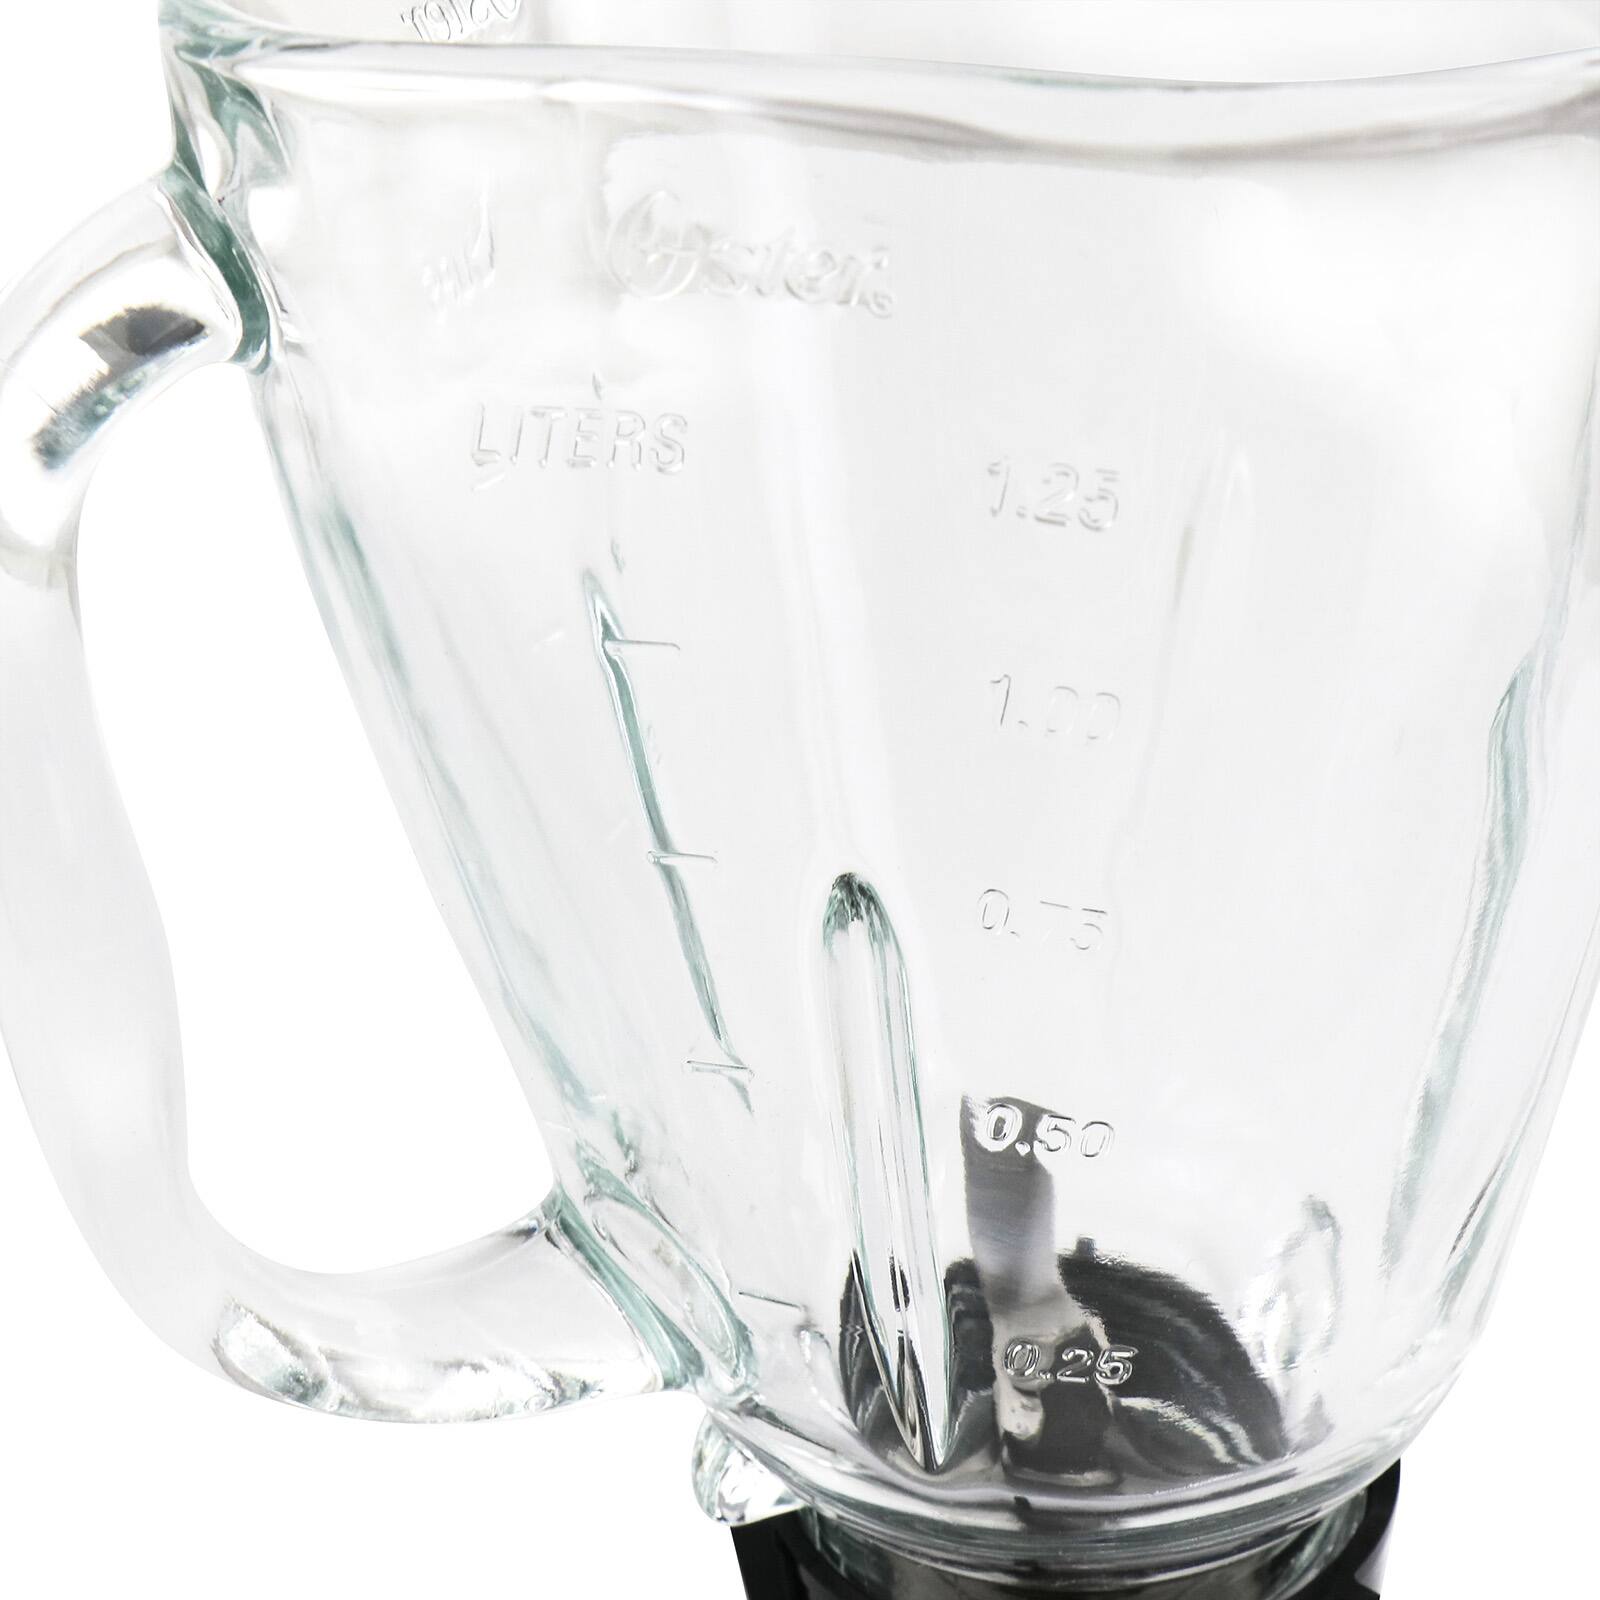 Oster 10 Speed Blender with Plastic Jar